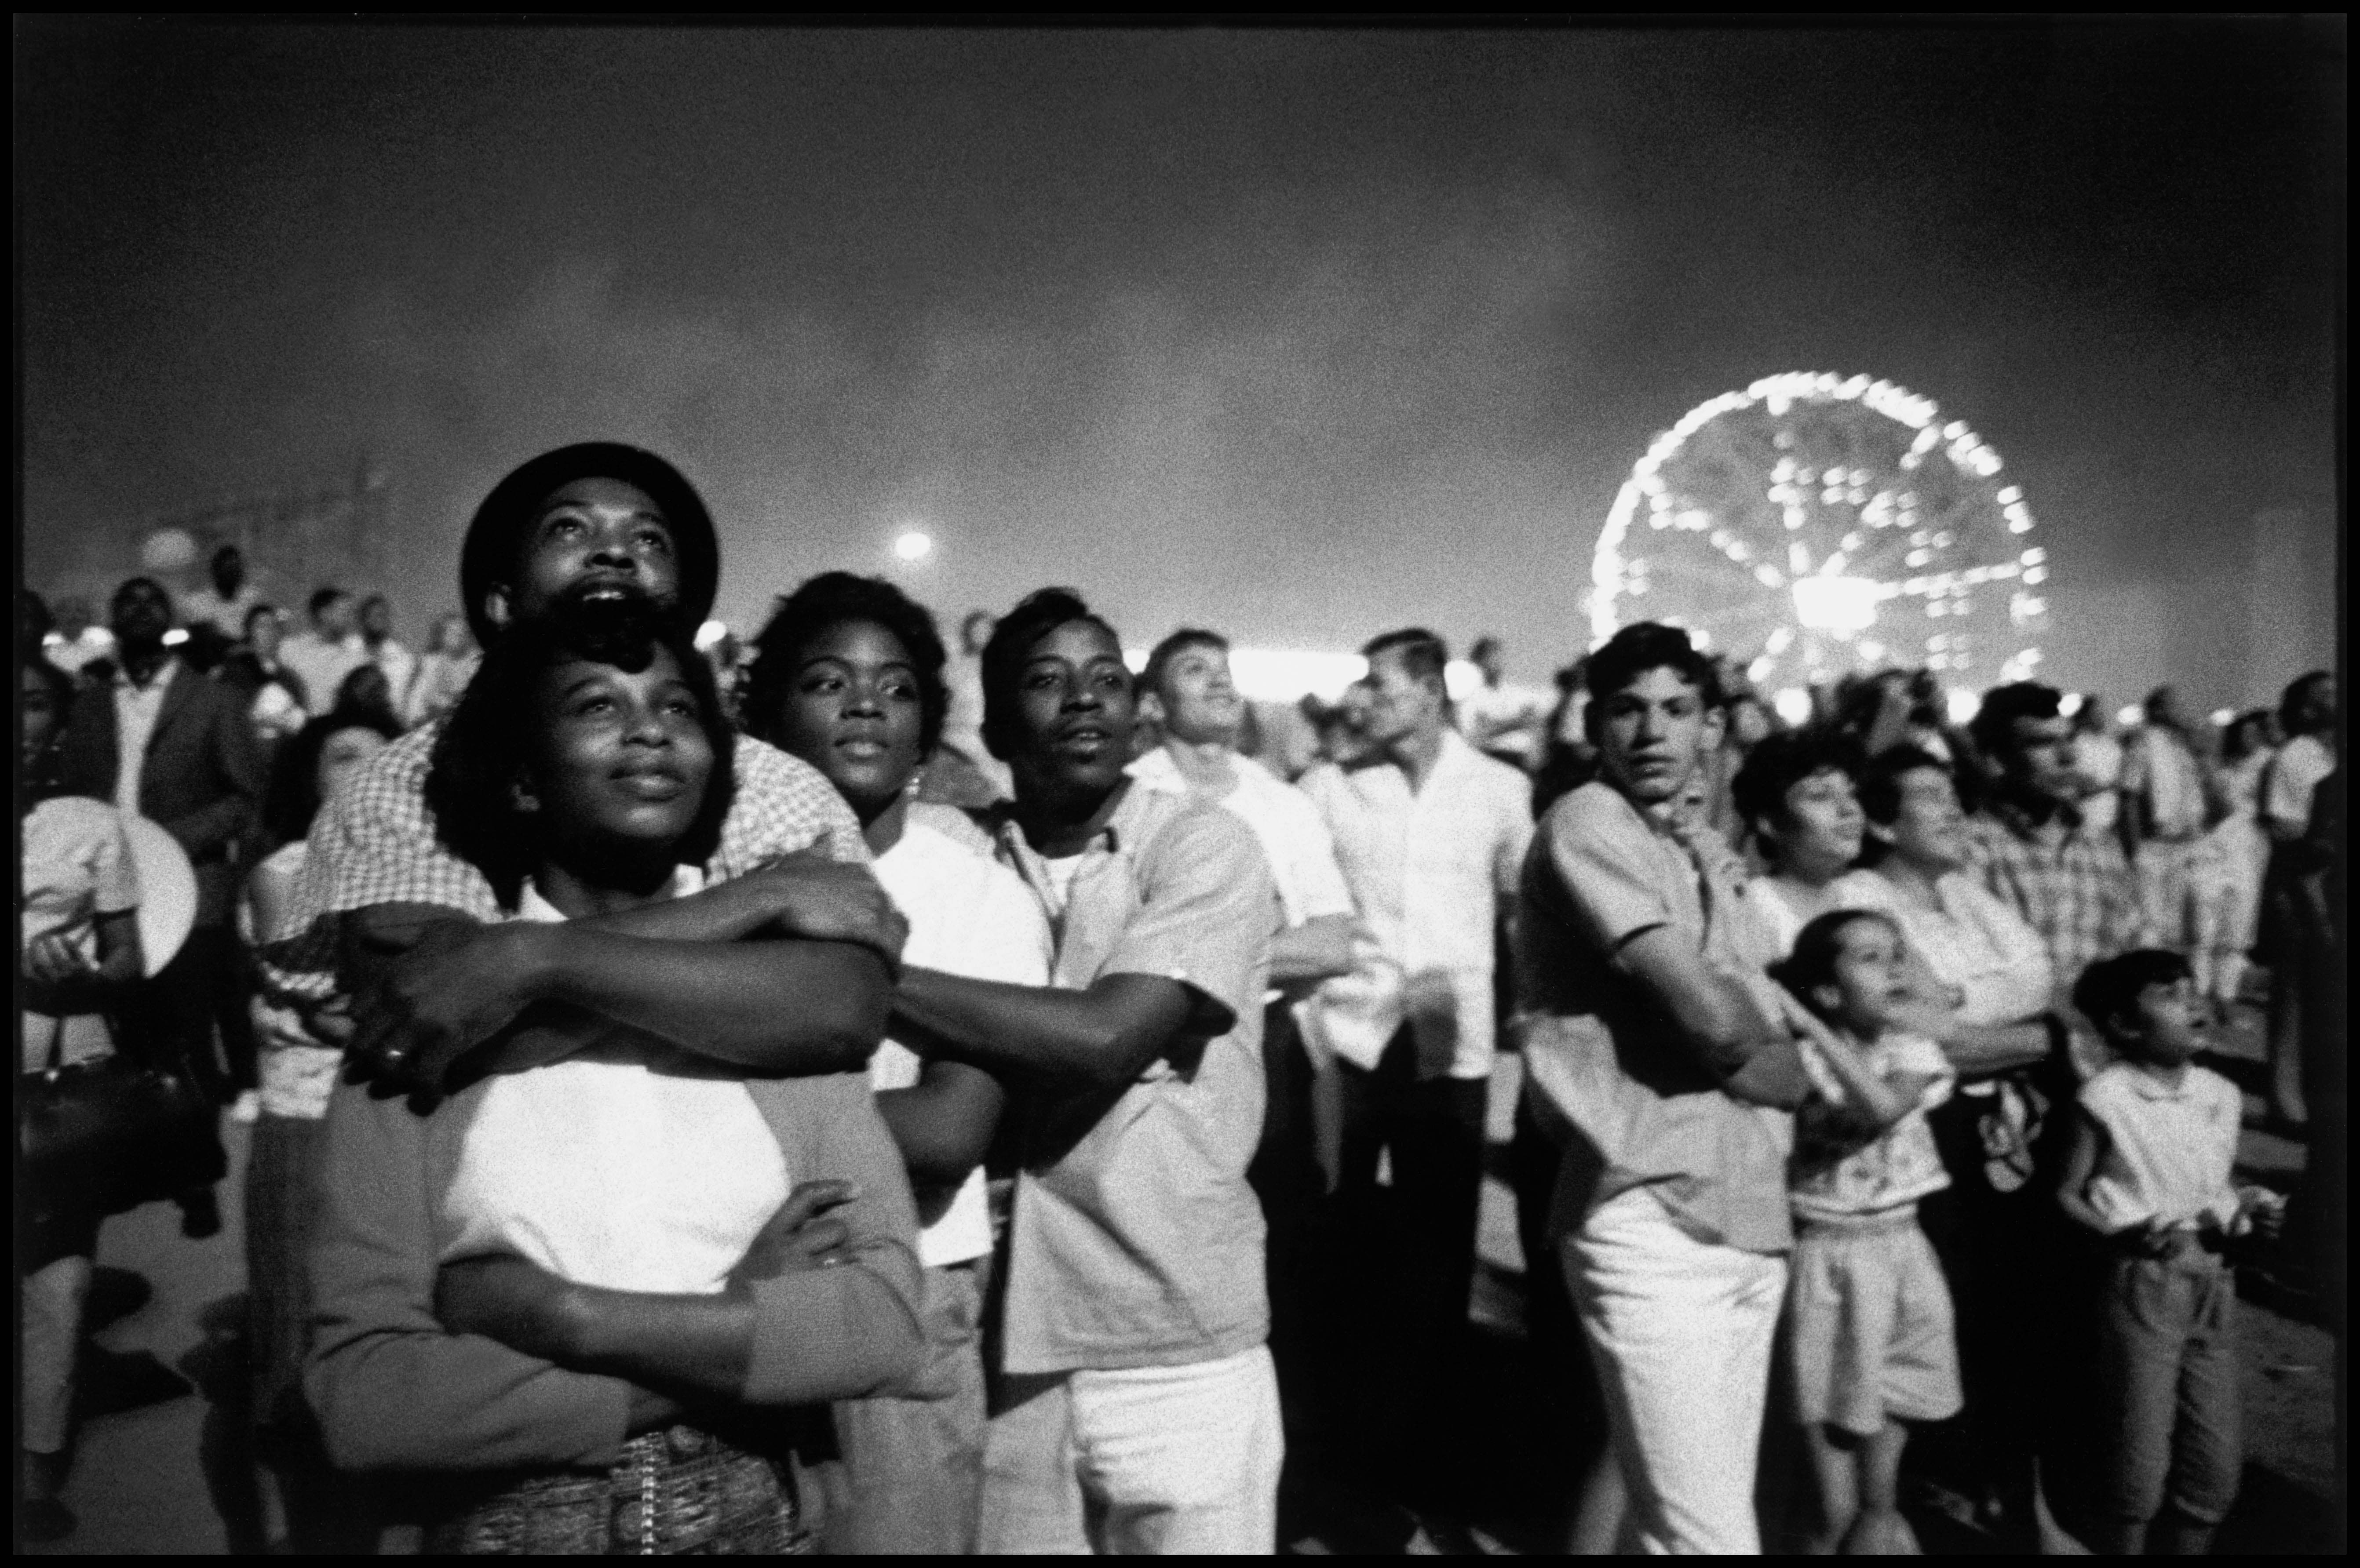 USA. New York City. 1962. Coney Island. 4th of July fireworks. © Bruce Davidson / Magnum Photos